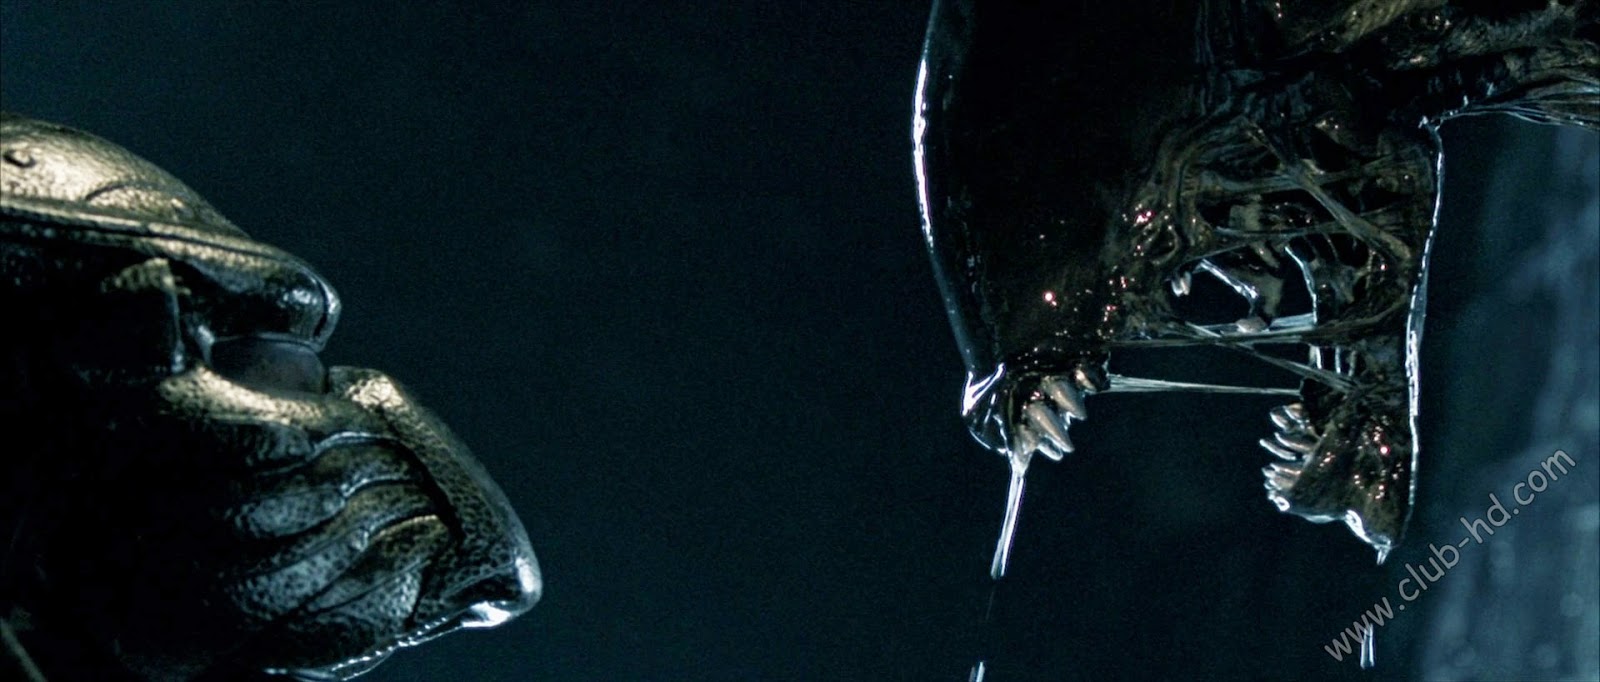 Alien_vs_Predator_UNRATED_CAPTURA-8.jpg